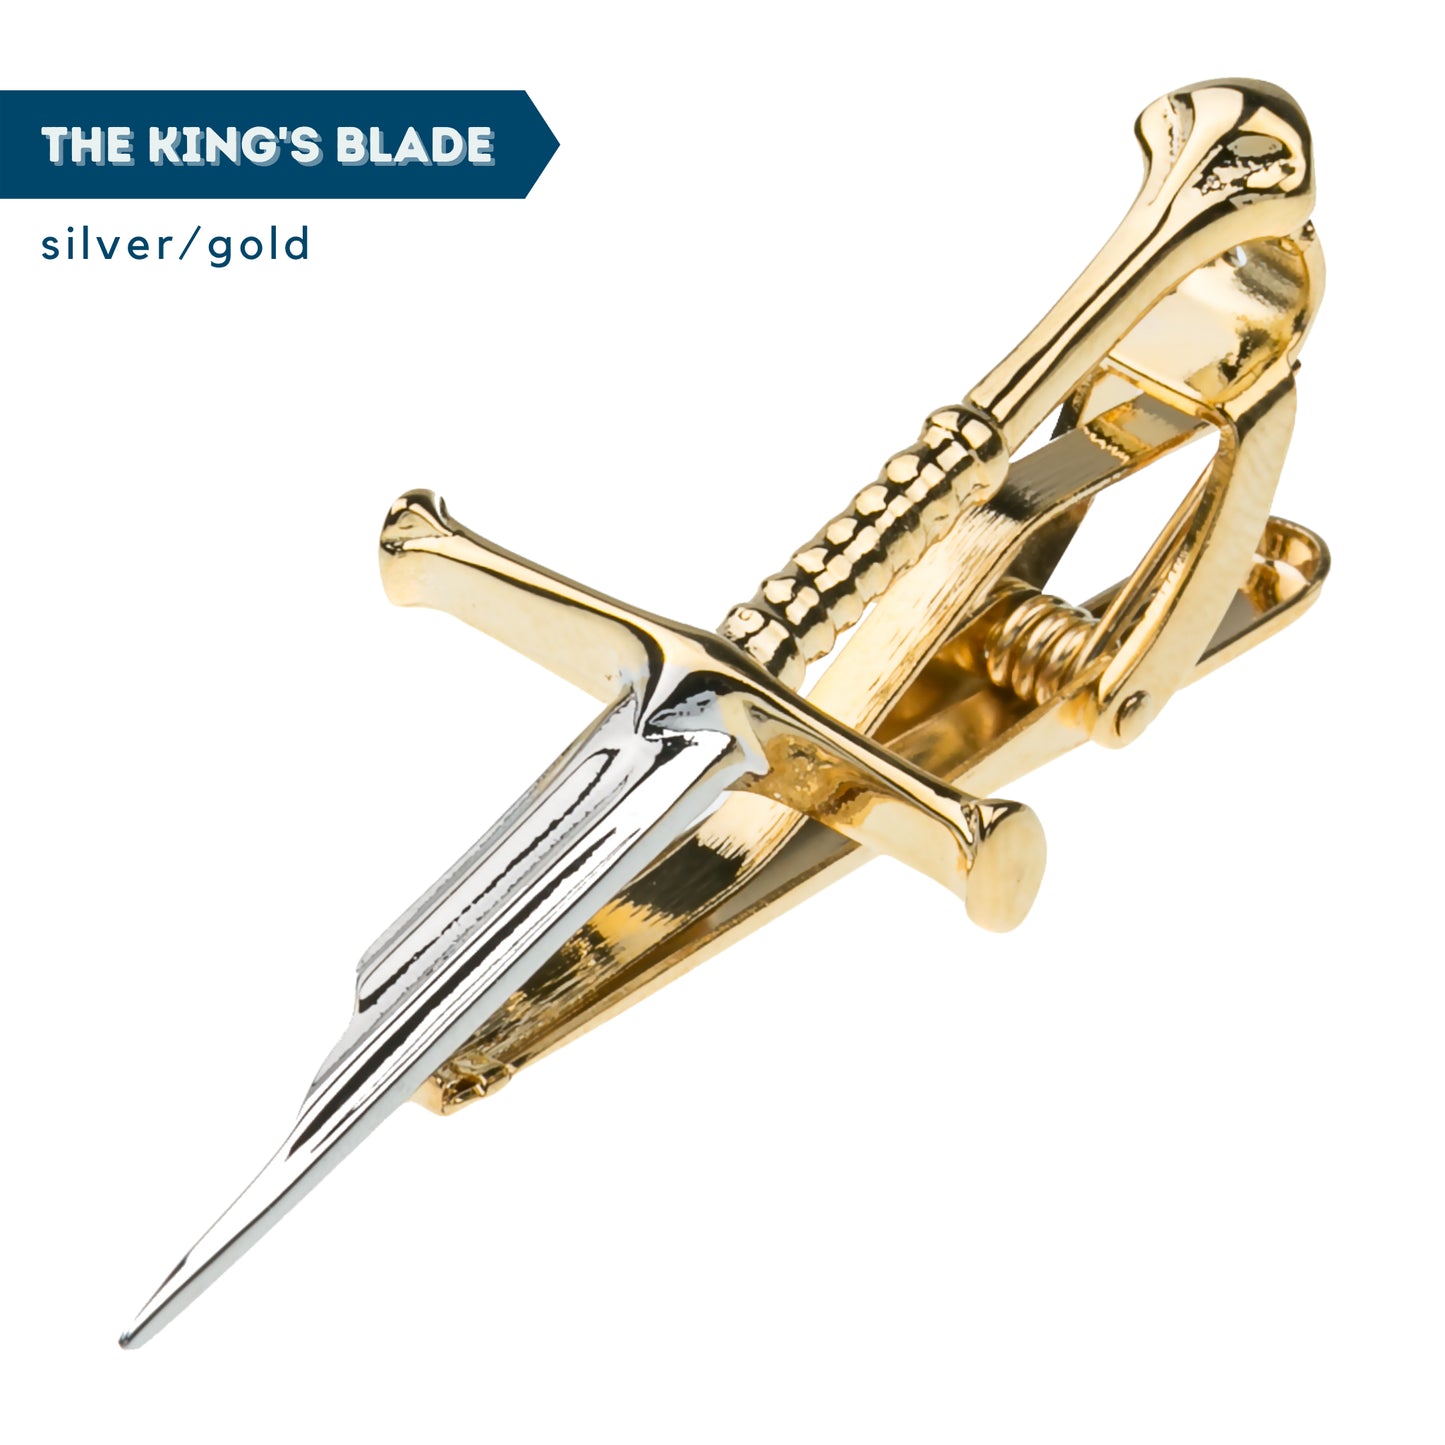 King's Tie + King's Blade